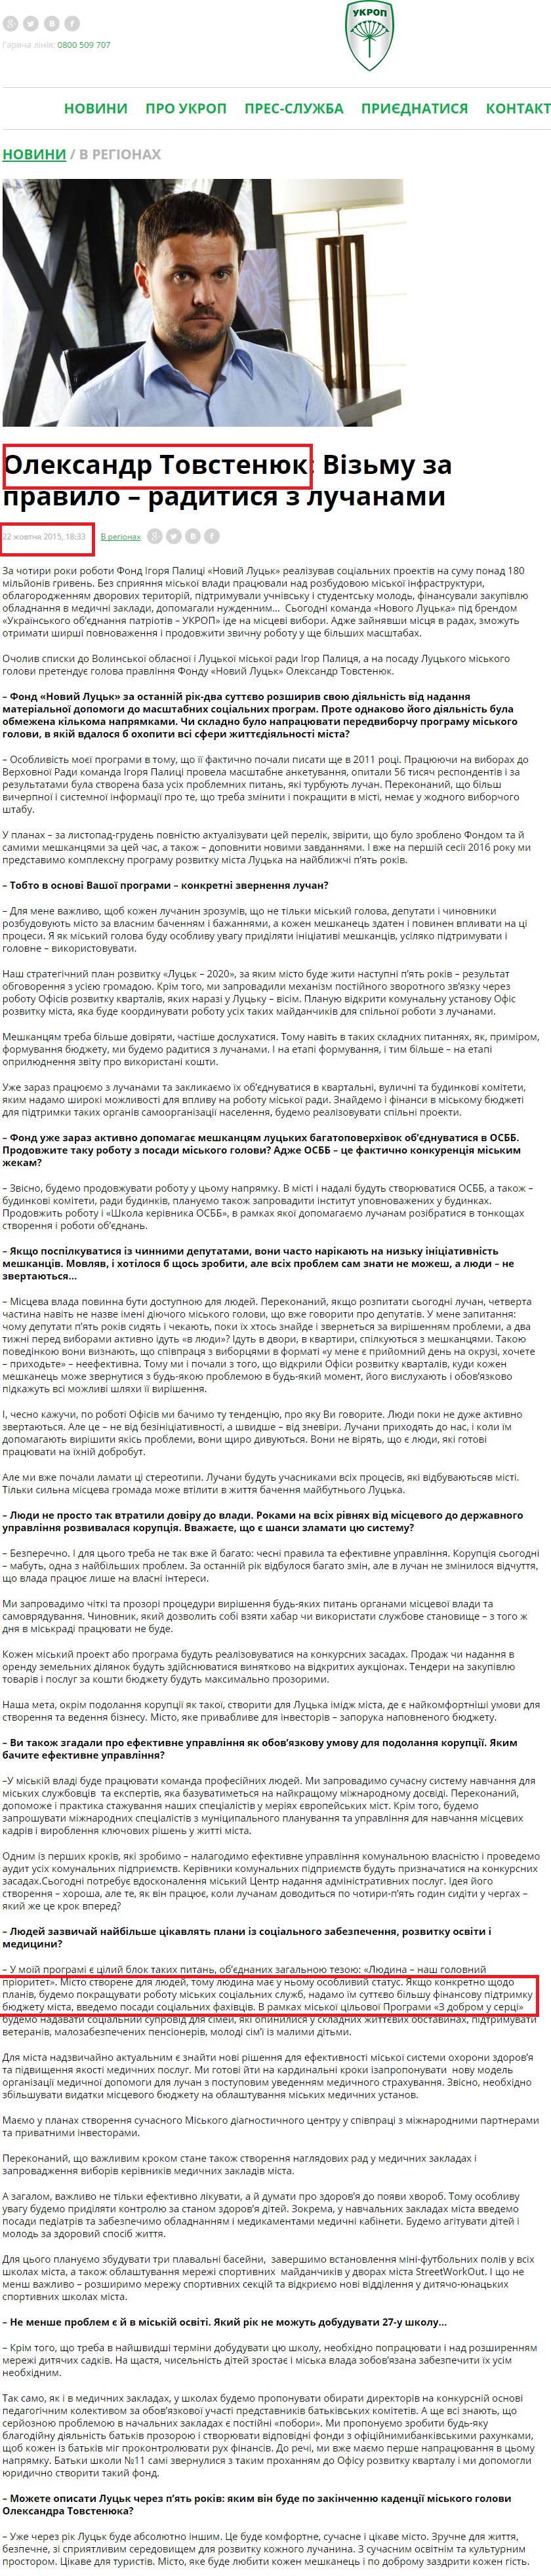 http://www.ukrop.com.ua/uk/news/regional/816-oleksandr-tovstenyuk-vizmu-za-pravilo-raditisya-z-luchanami